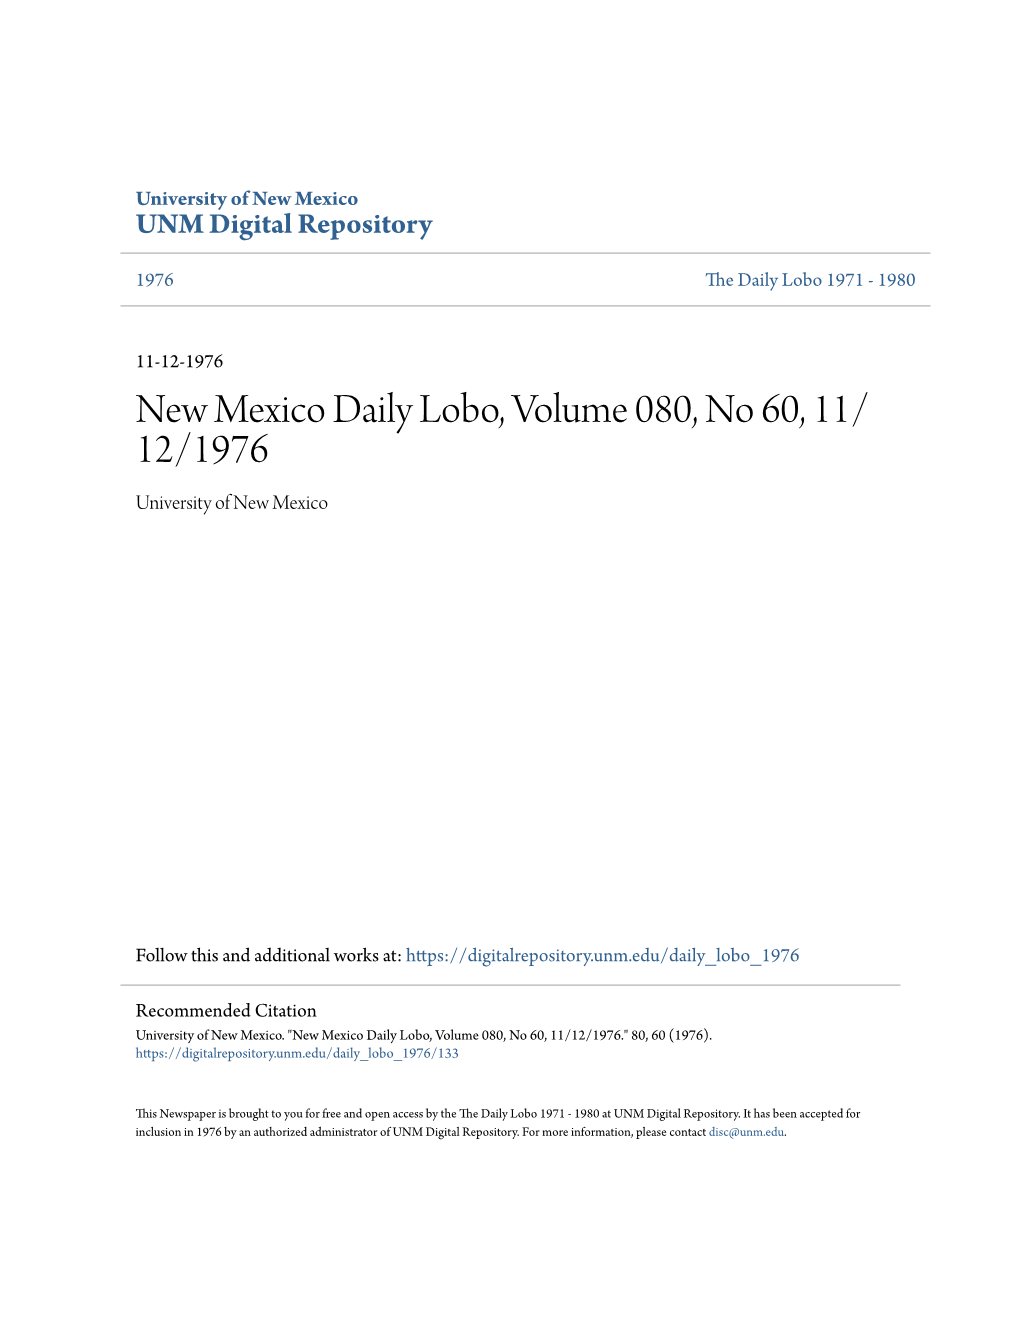 New Mexico Daily Lobo, Volume 080, No 60, 11/12/1976." 80, 60 (1976)